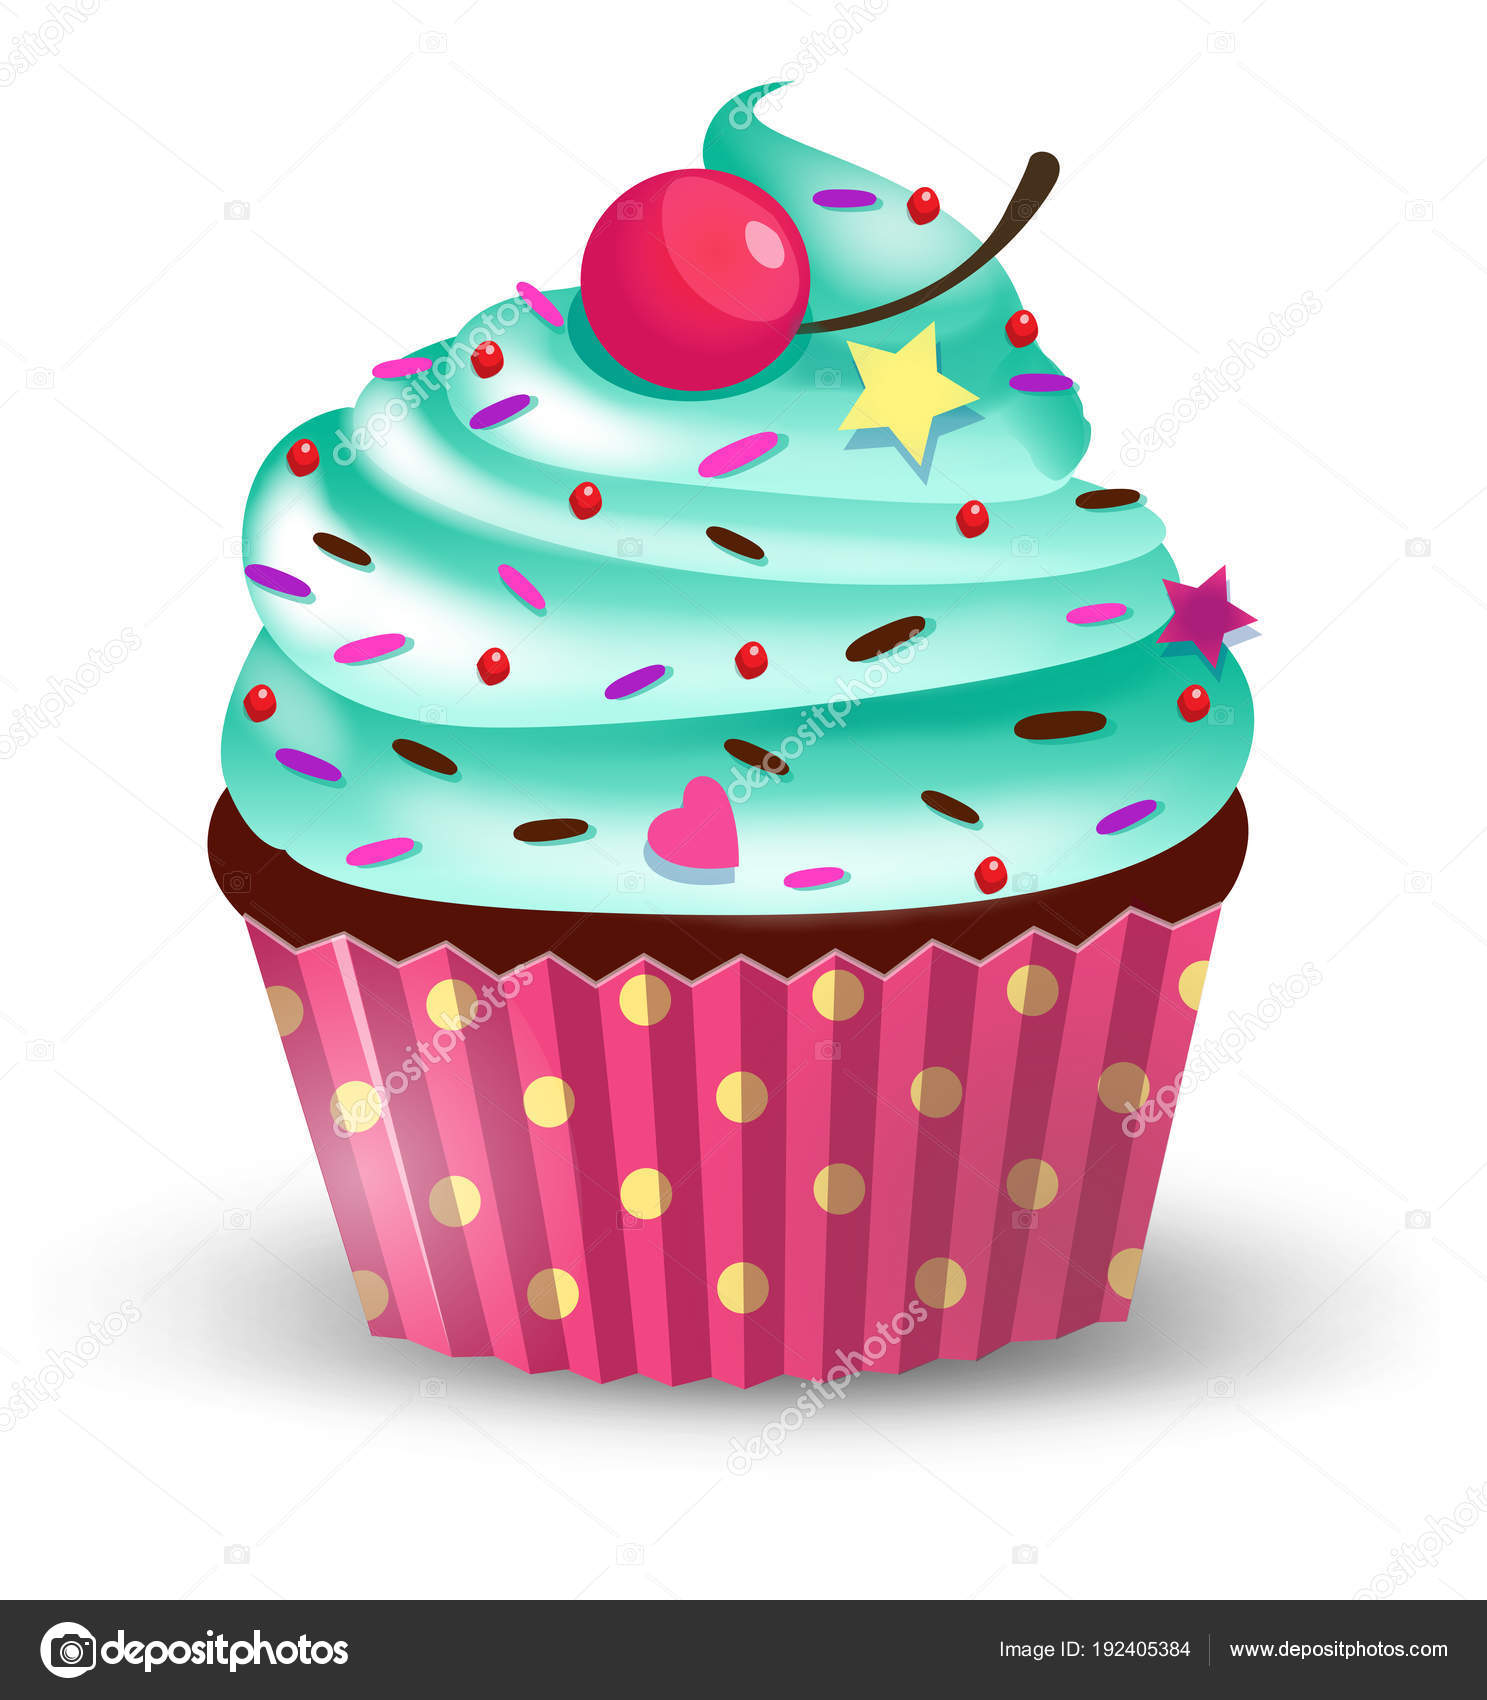 Clipart: cute cartoon cupcake | Handmade cute cartoon cup cake with